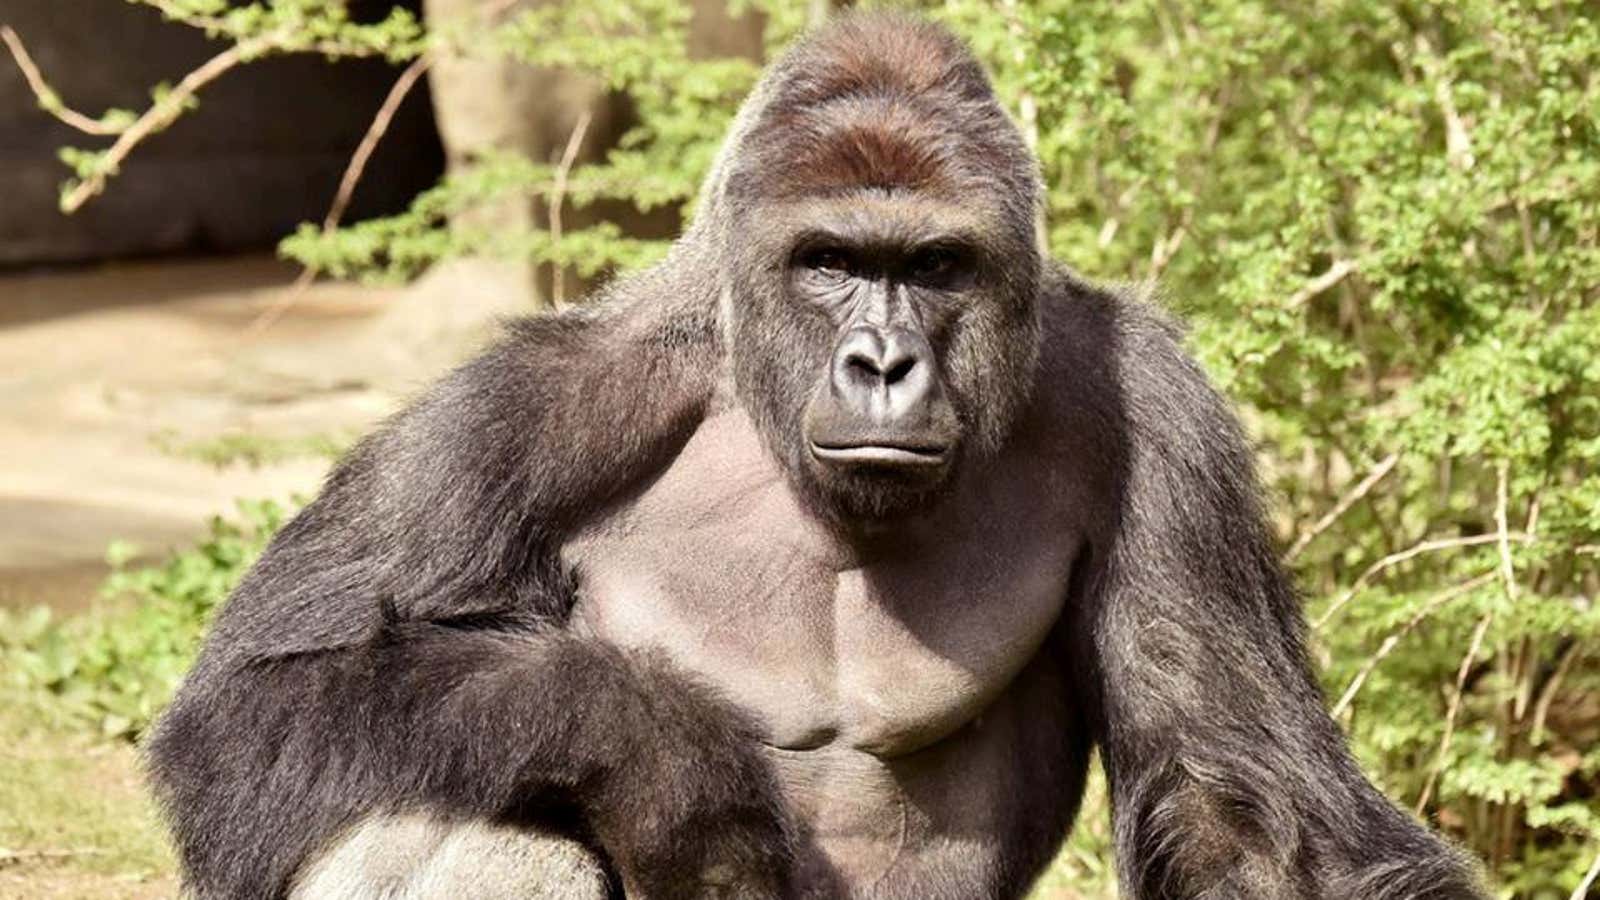 Harambe, the deceased 17-year-old gorilla at the Cincinnati Zoo